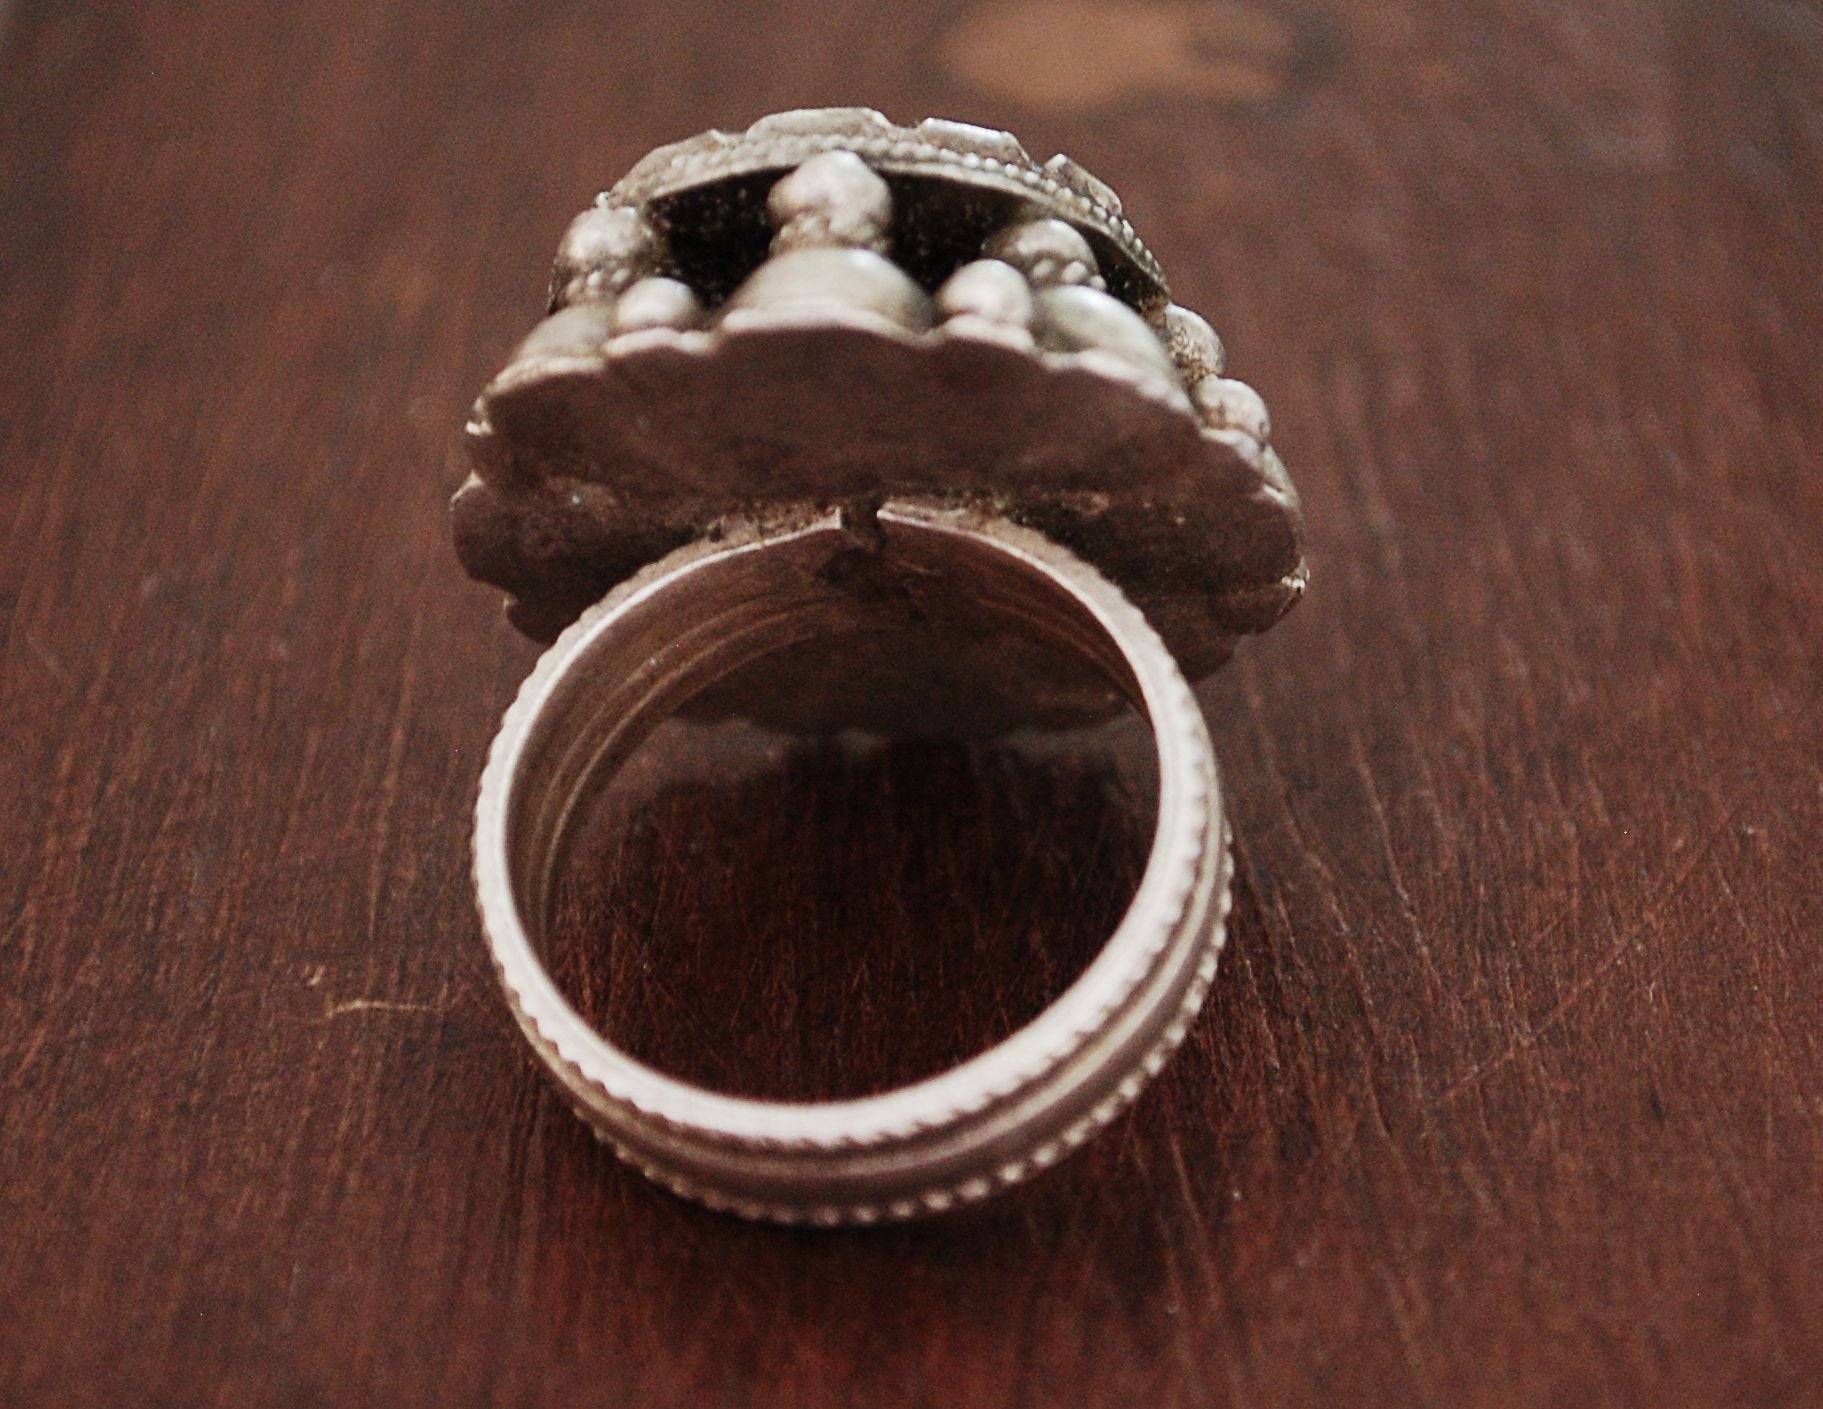 Rajasthani Silver Ring with Lapis Lazuli - Size 8.5 - Rajasthani Silver - Rajasthani Jewelry - Tribal Indian Silver Ring - Lapis Lazuli Ring